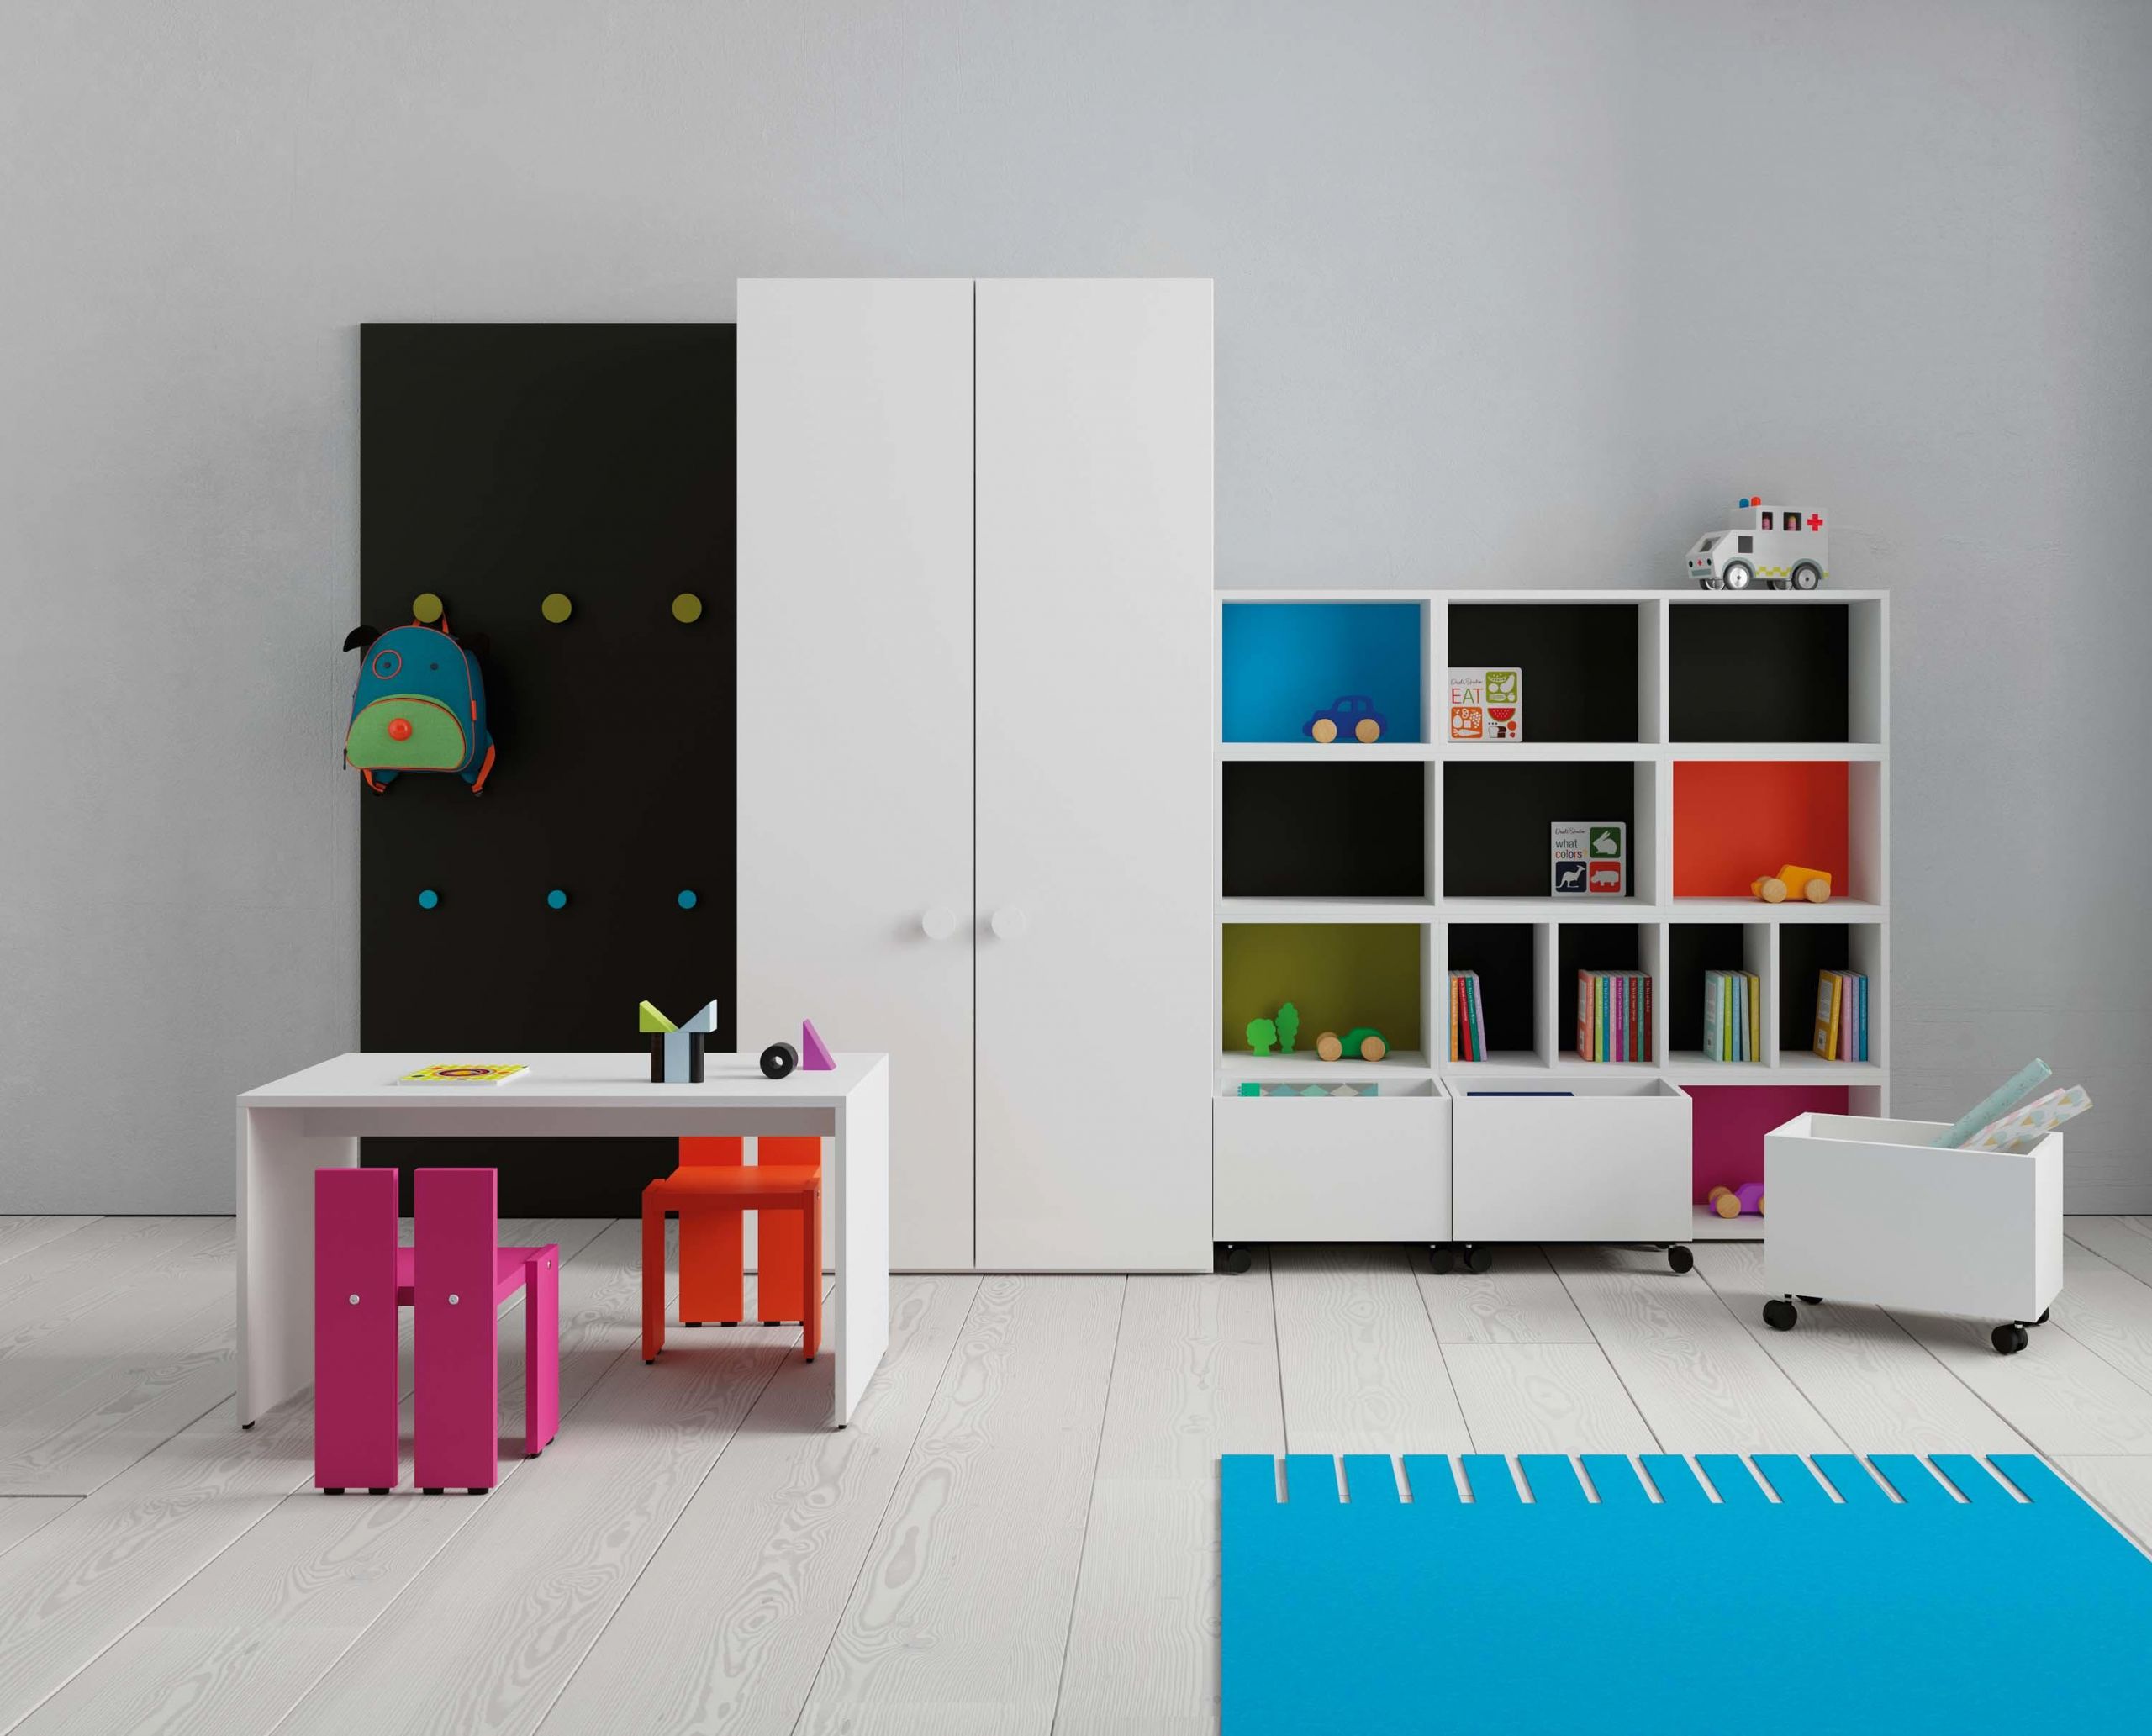 Kids Game Room Furniture
 CHILDREN S ROOM FOR GAMES 07 Kids storage furniture from